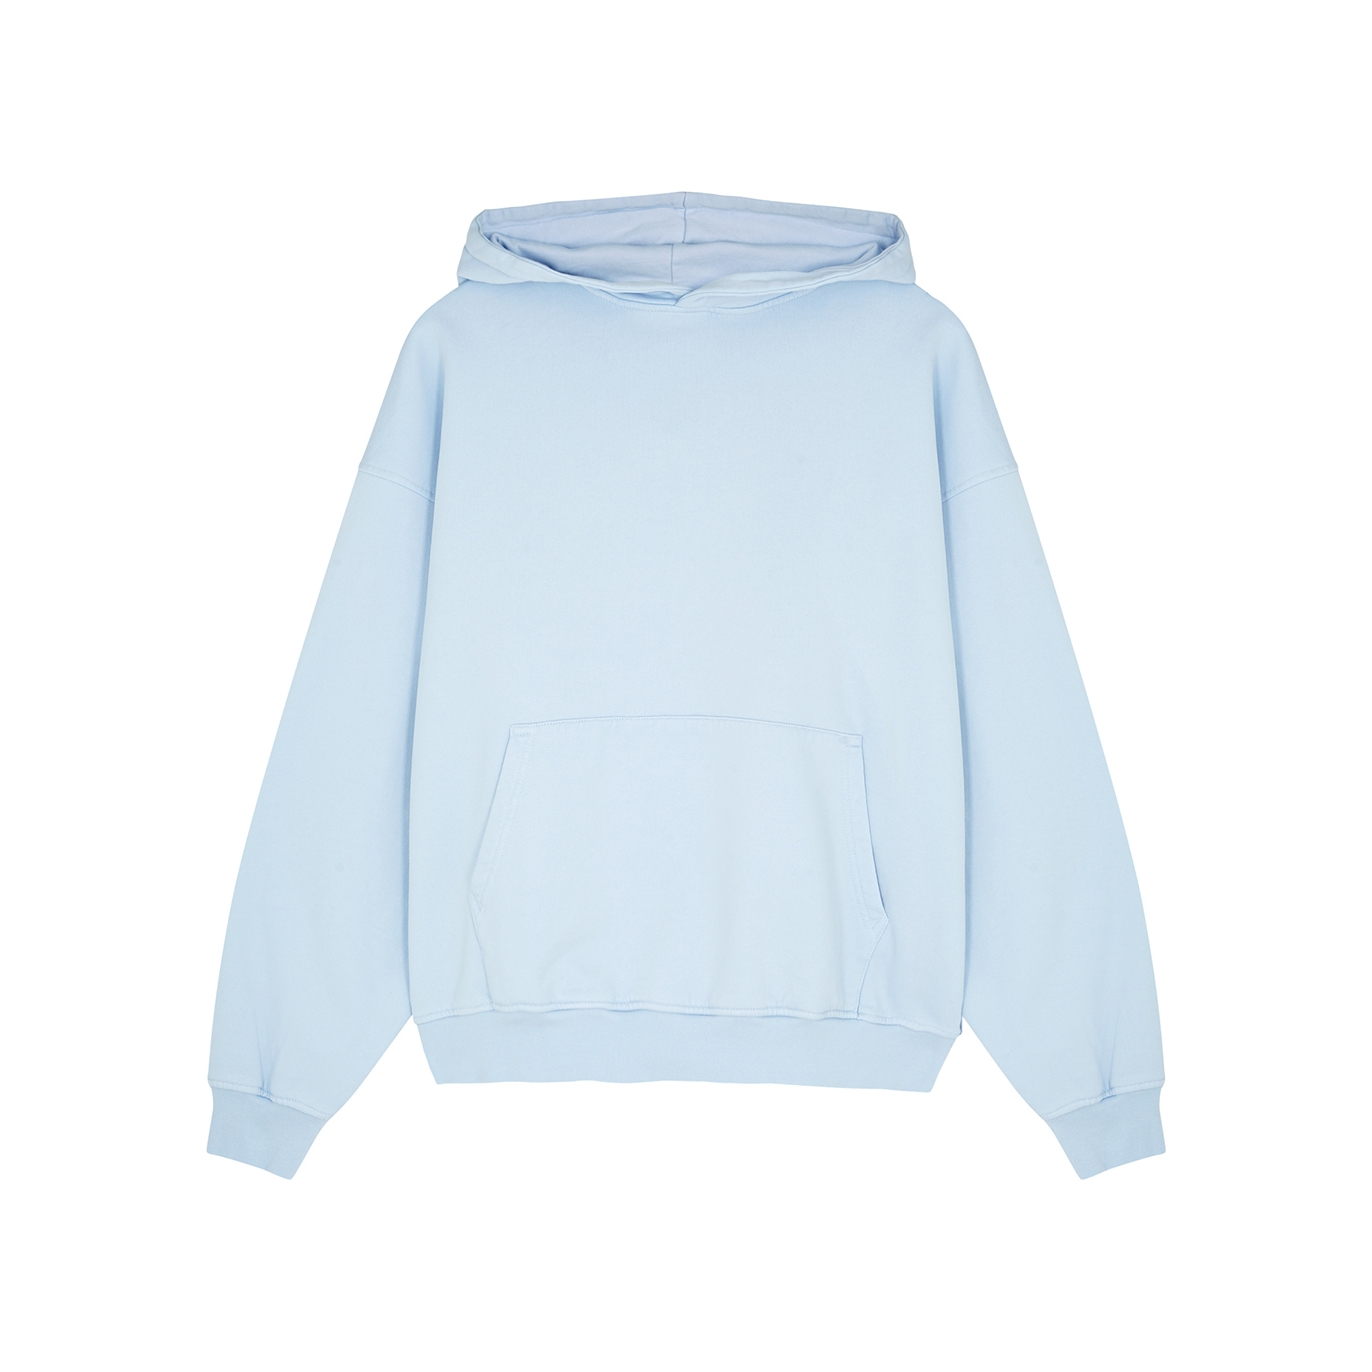 Colorful Standard Light Blue Hooded Cotton Sweatshirt